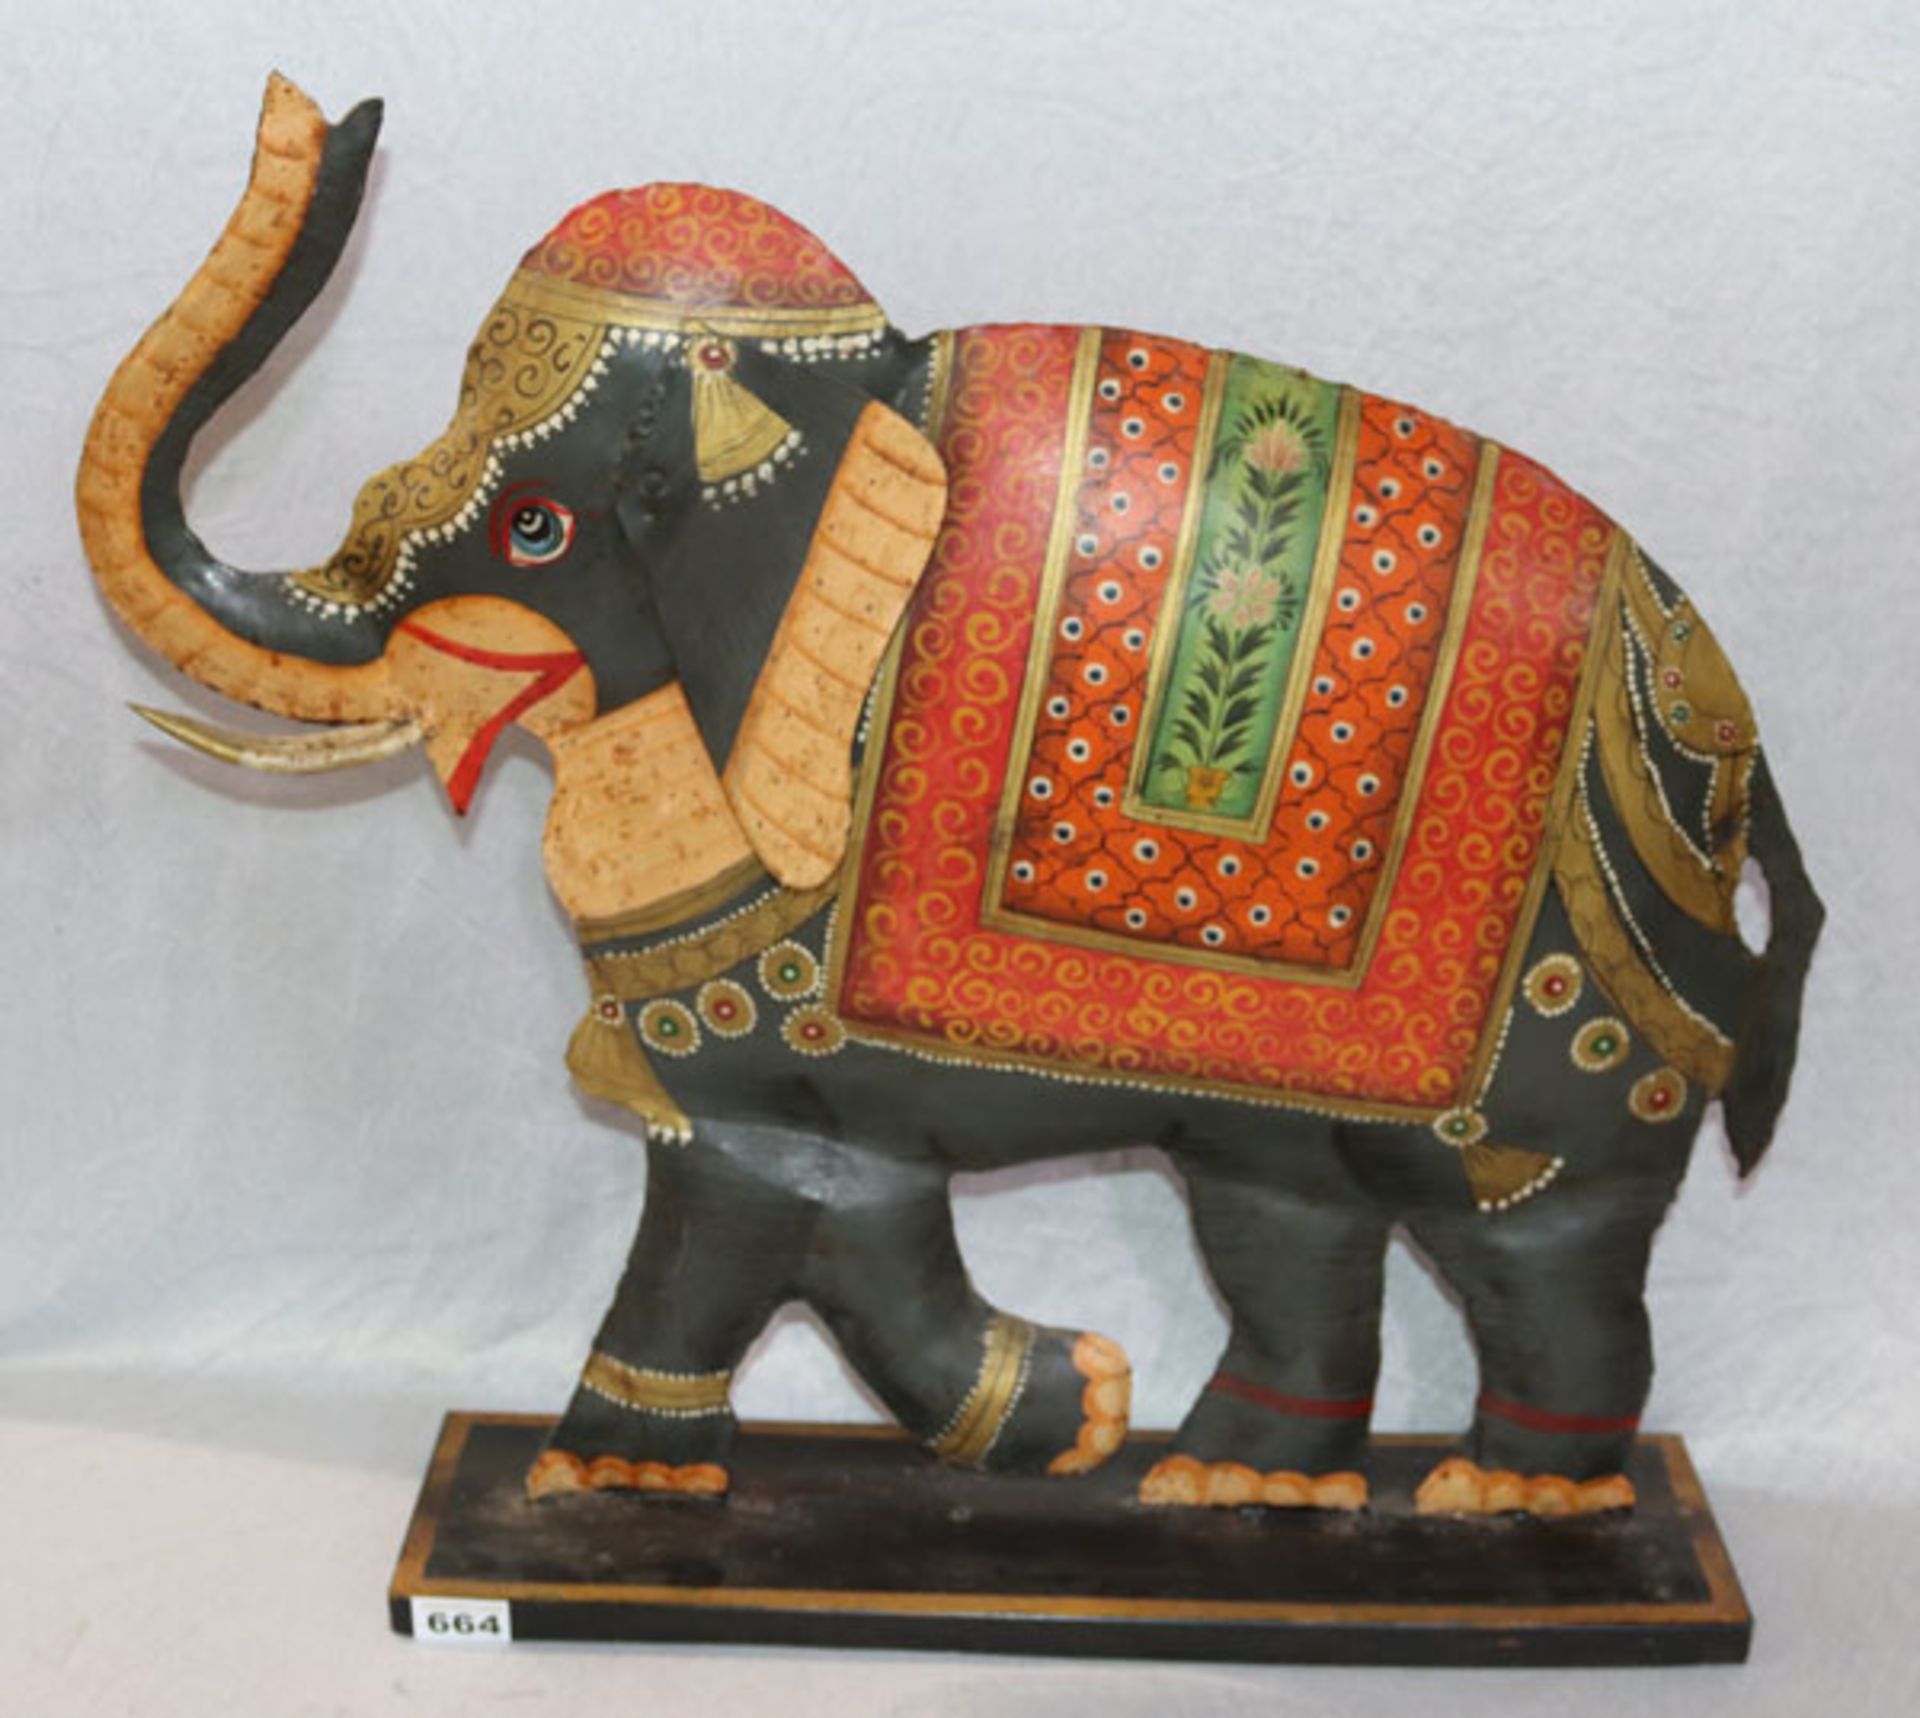 Metallobjekt 'Elefant', farbig bemalt, H 60 cm, B 70 cm, Altersspuren